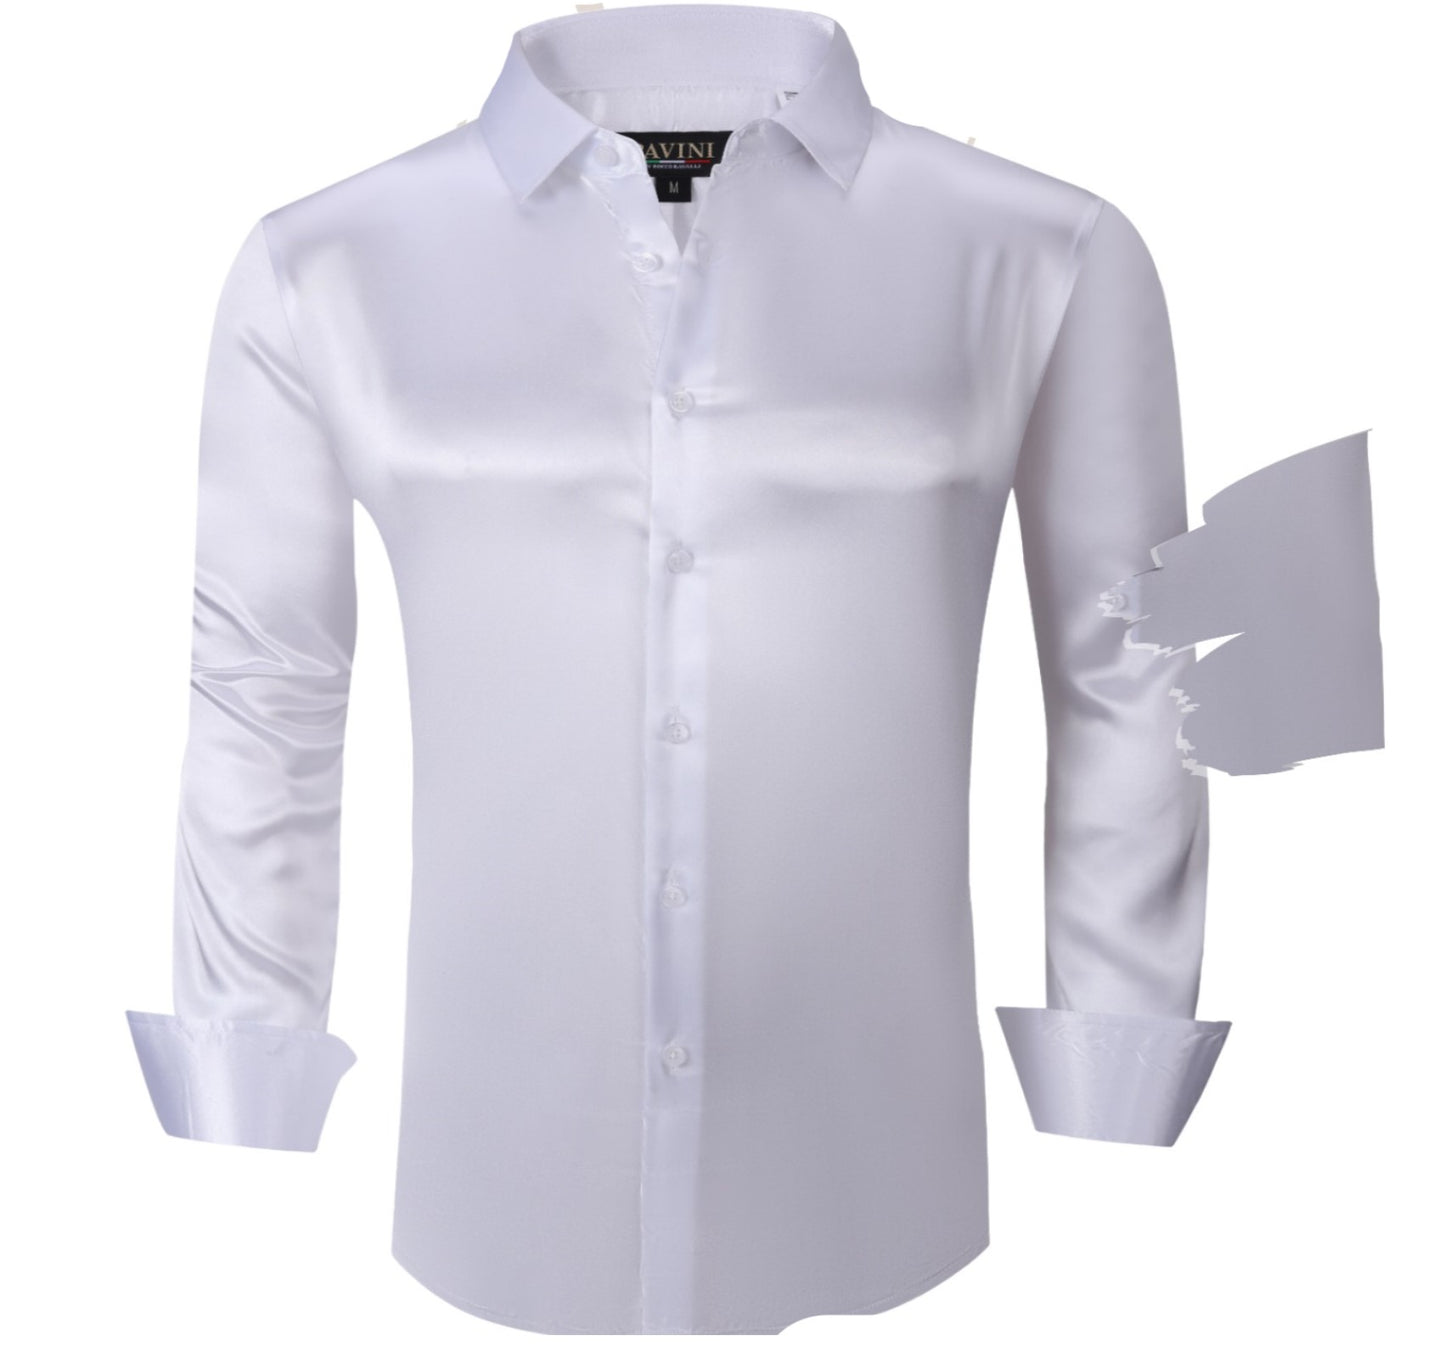 Camisa para Hombre Marca Pavini PVLS027-02 Blanca